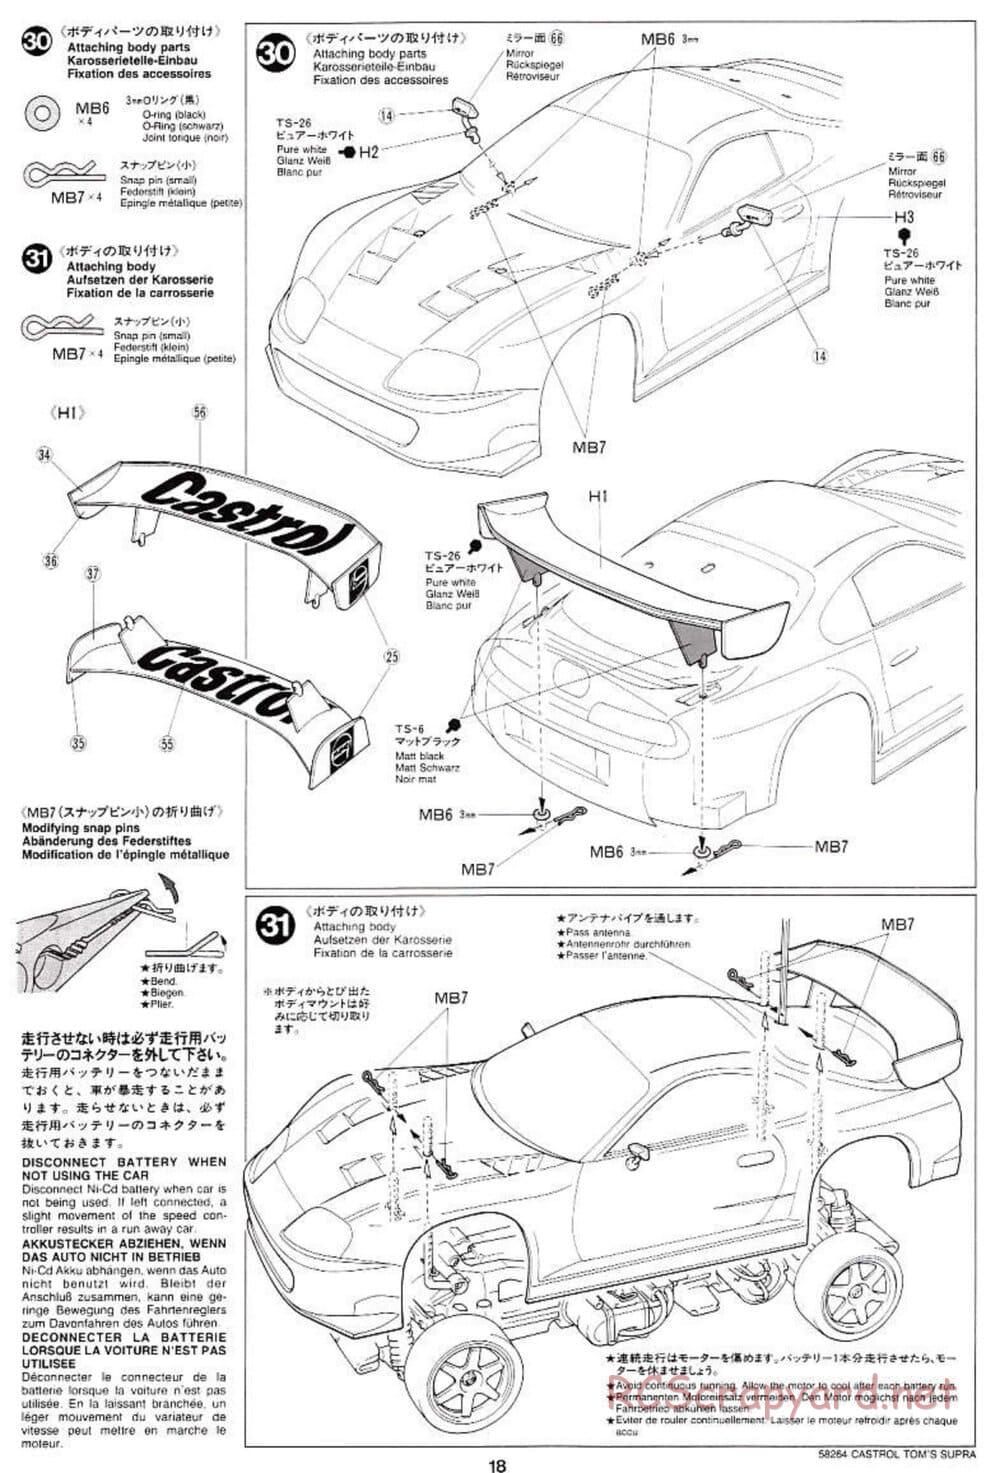 Tamiya - Castrol Tom's Supra 2000 - TL-01 Chassis - Manual - Page 18